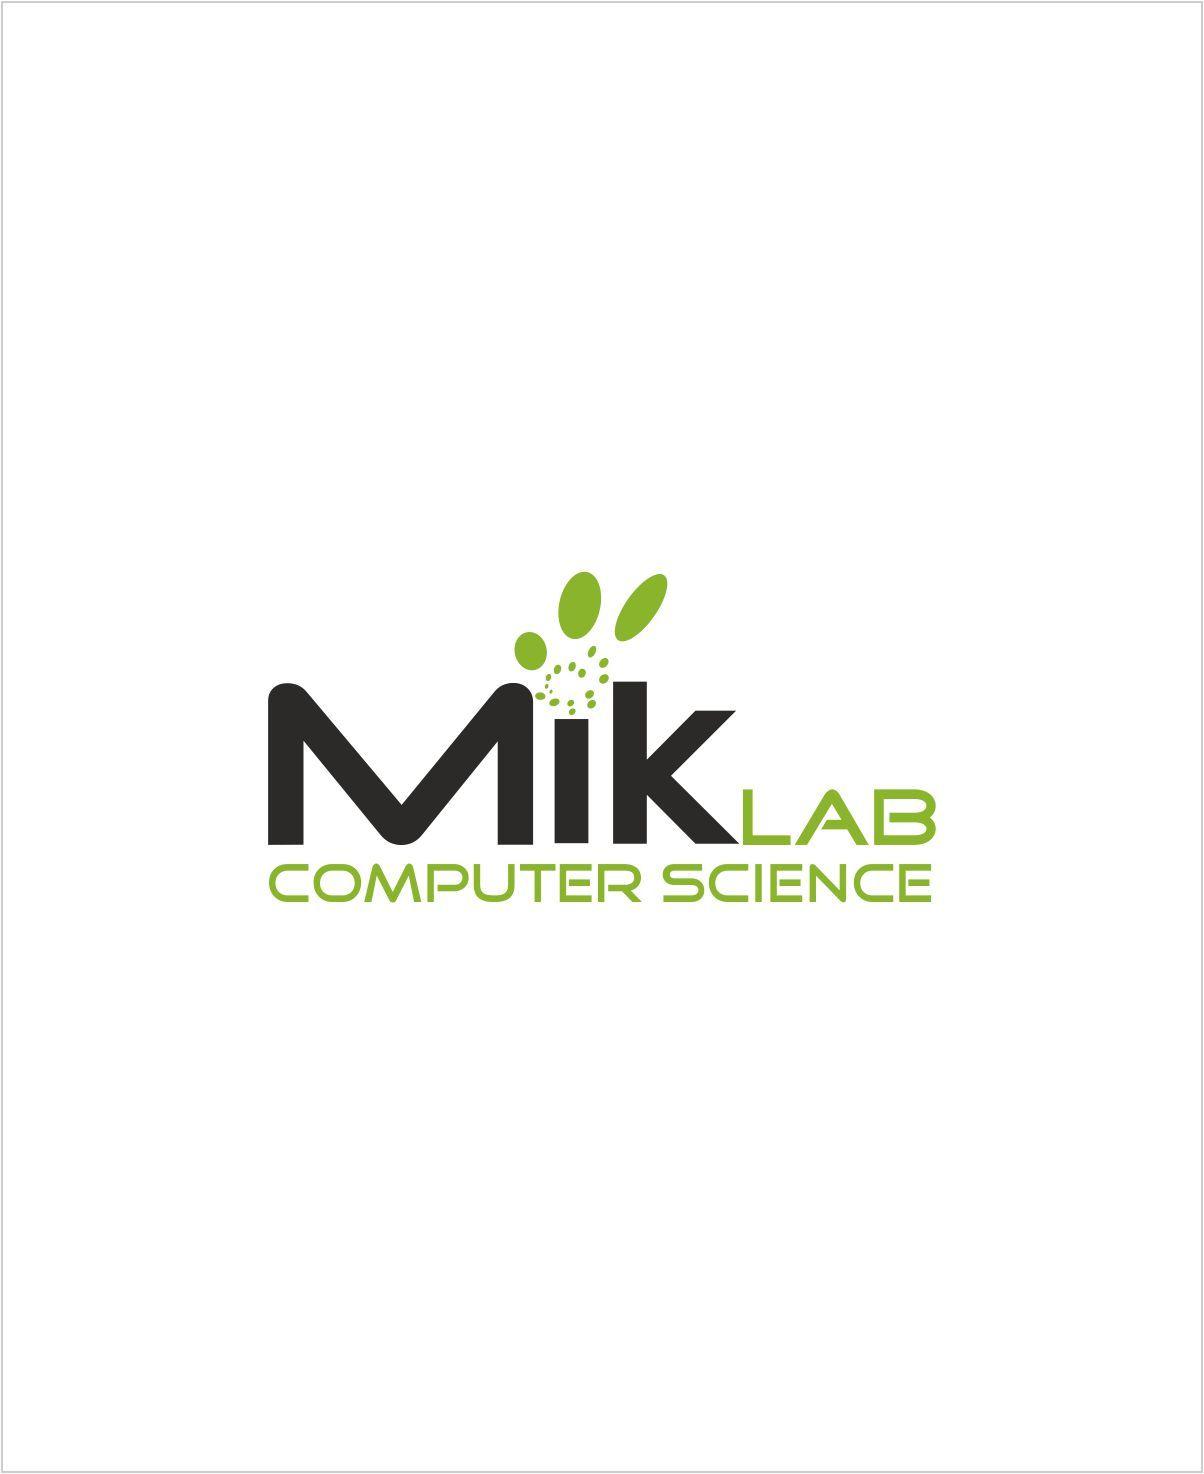 Computer Technology Logo - Modern, Professional, Information Technology Logo Design for Mik Lab